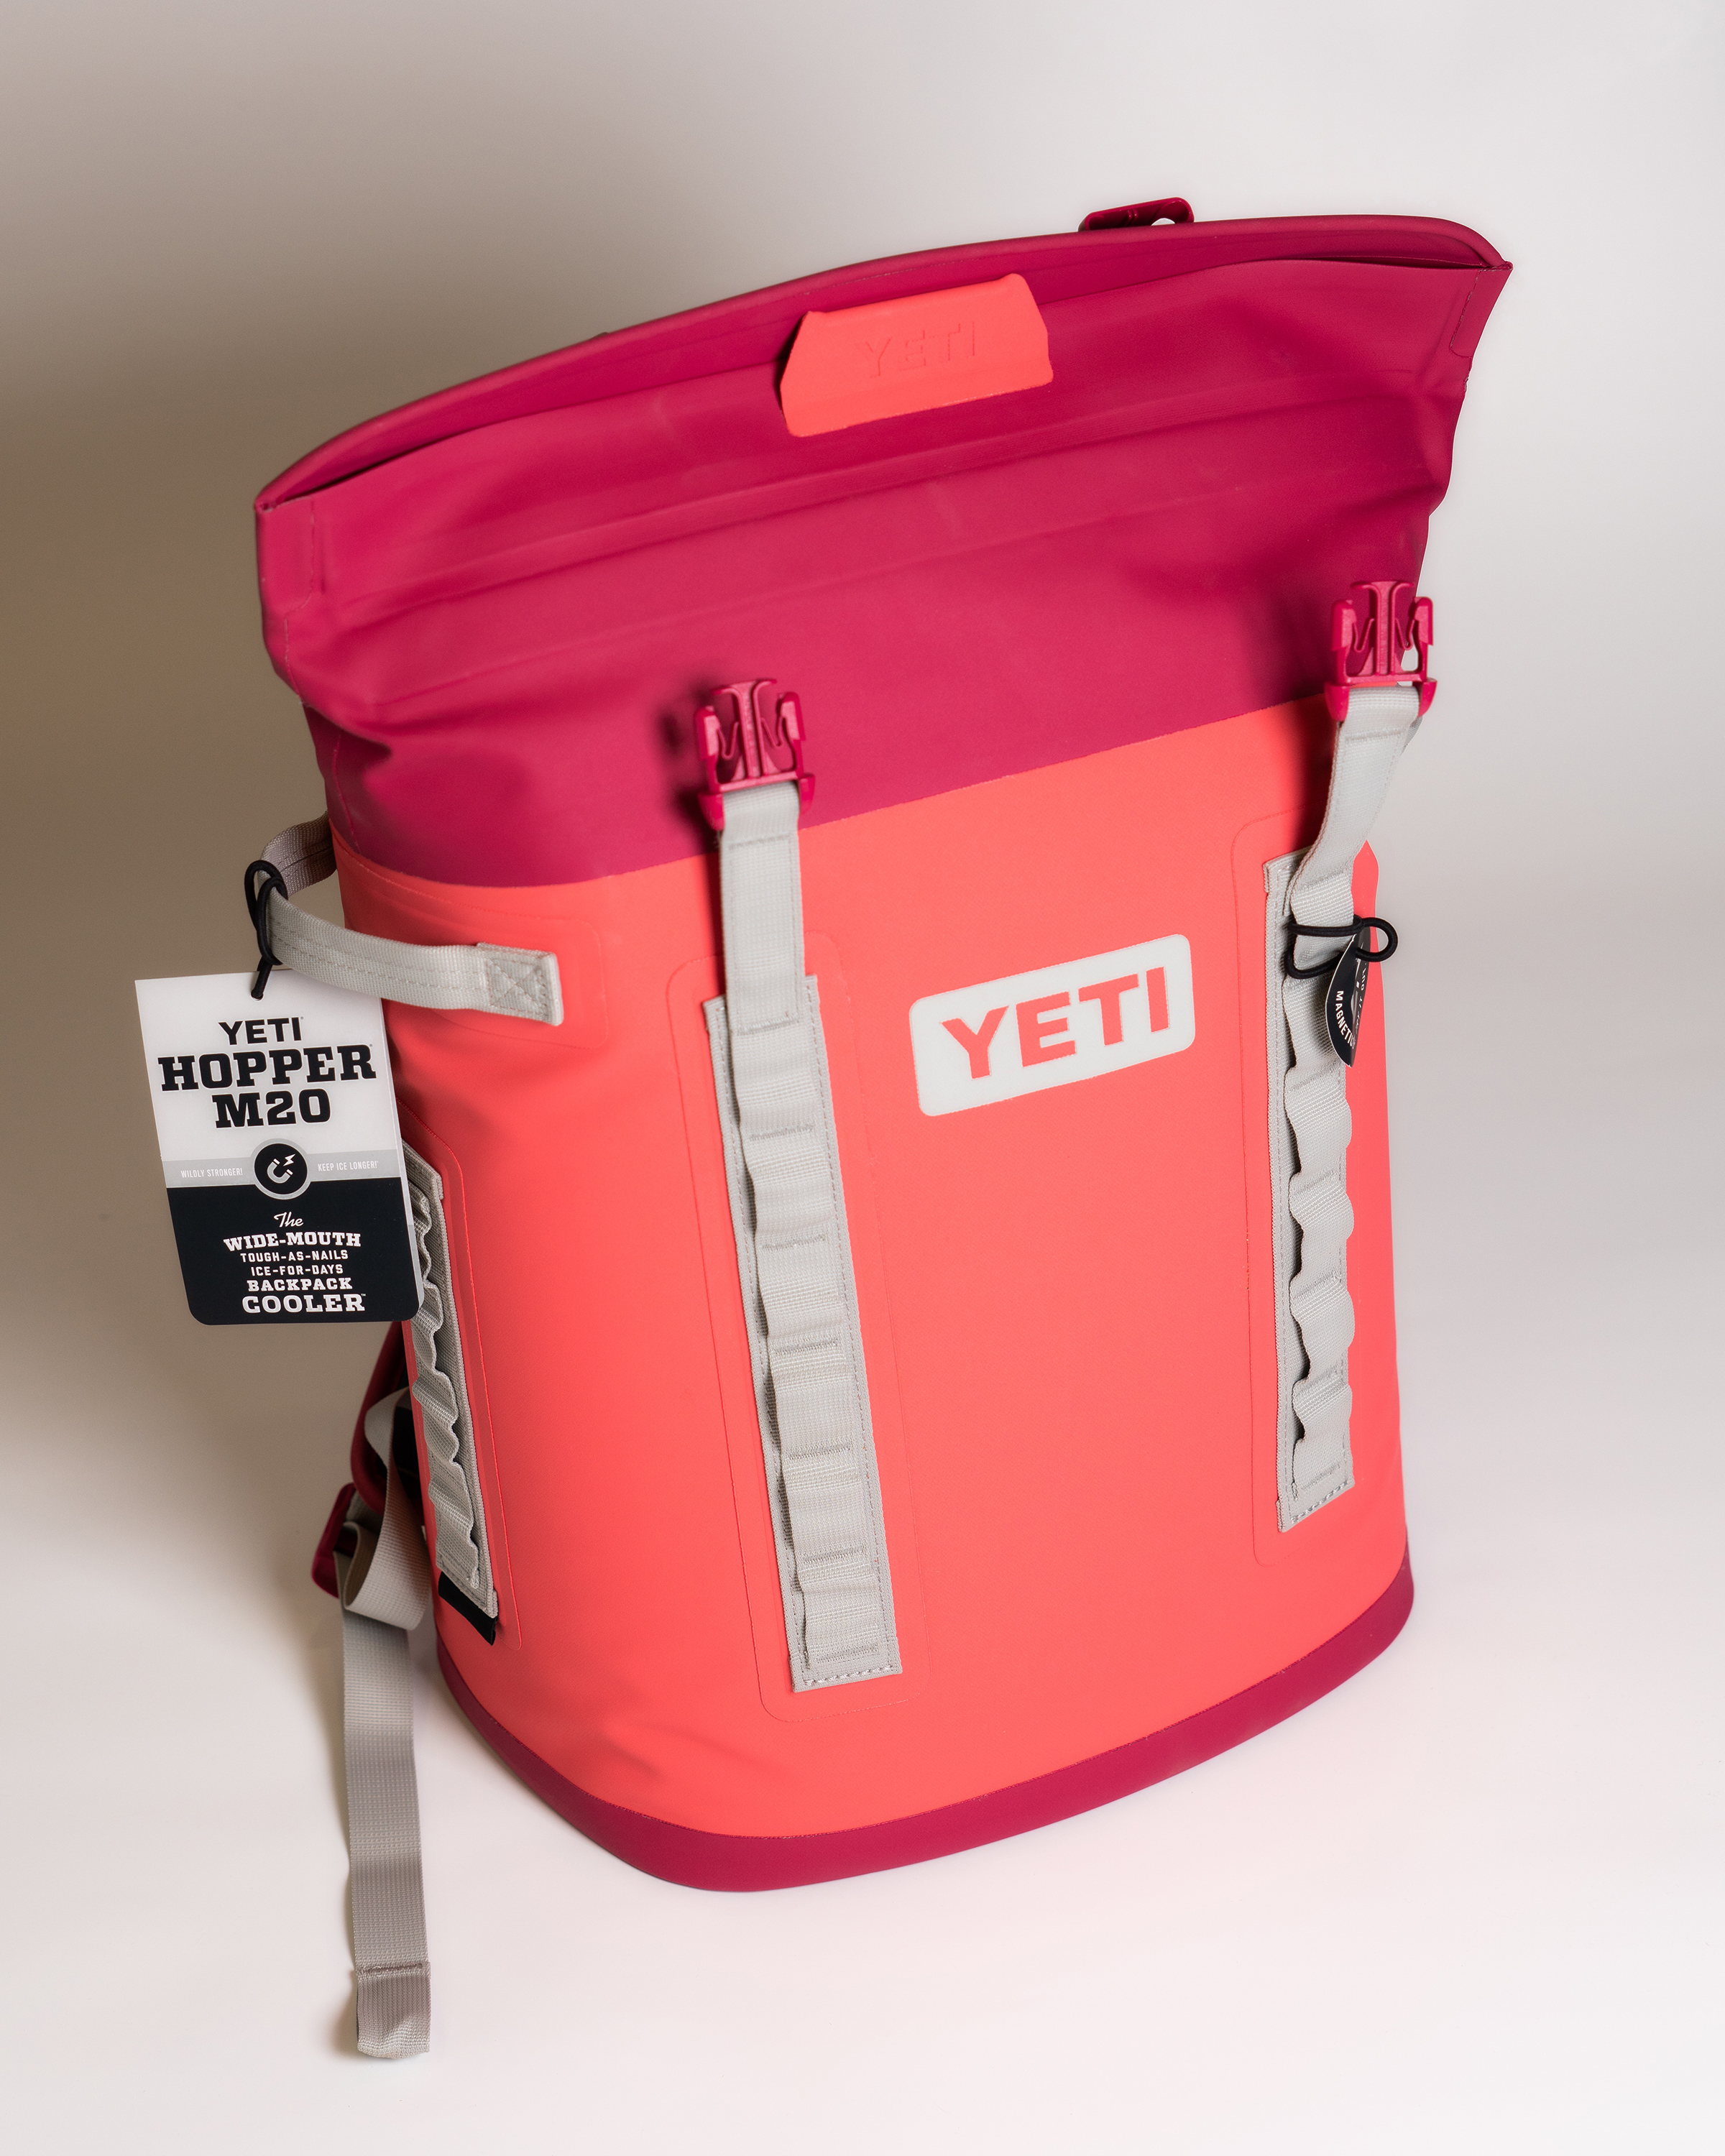 YETI - Hopper Backpack M20 - Bimini Pink